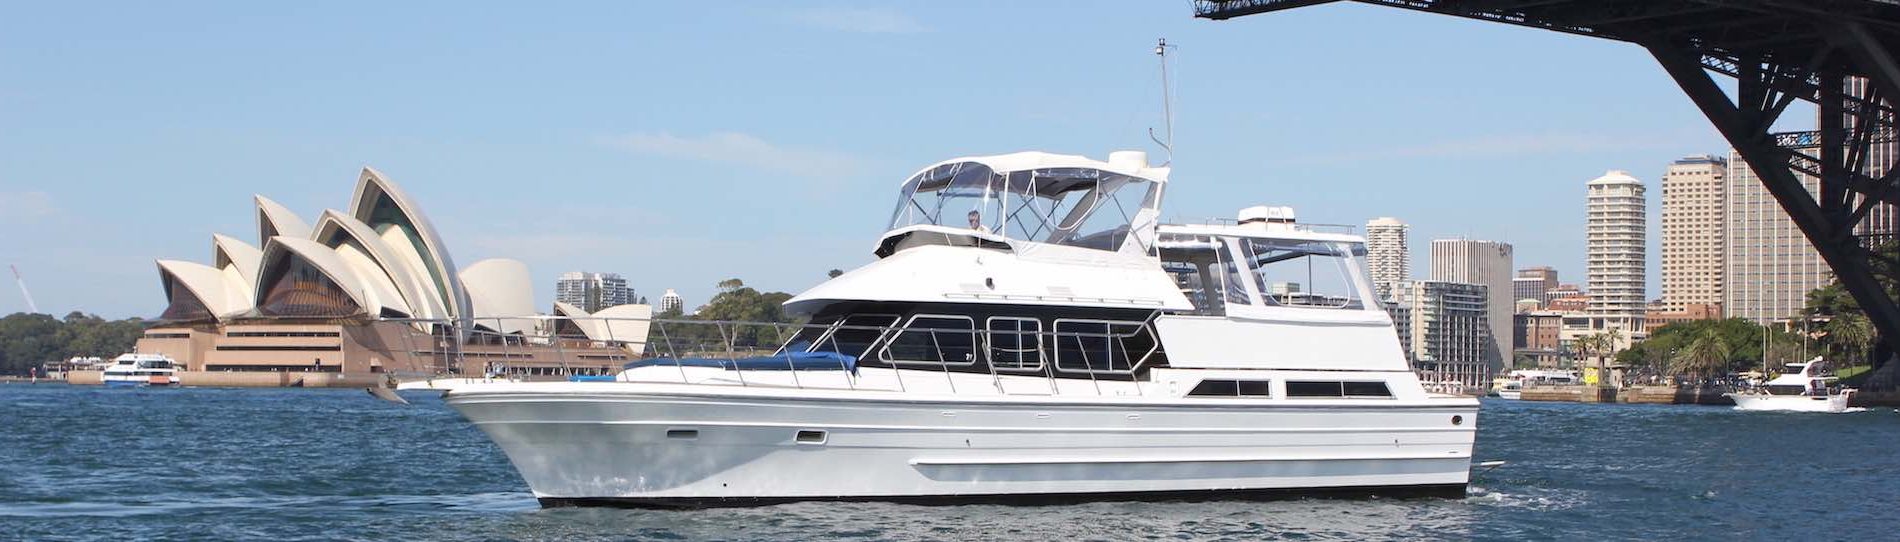 bucks sydney boat cruise